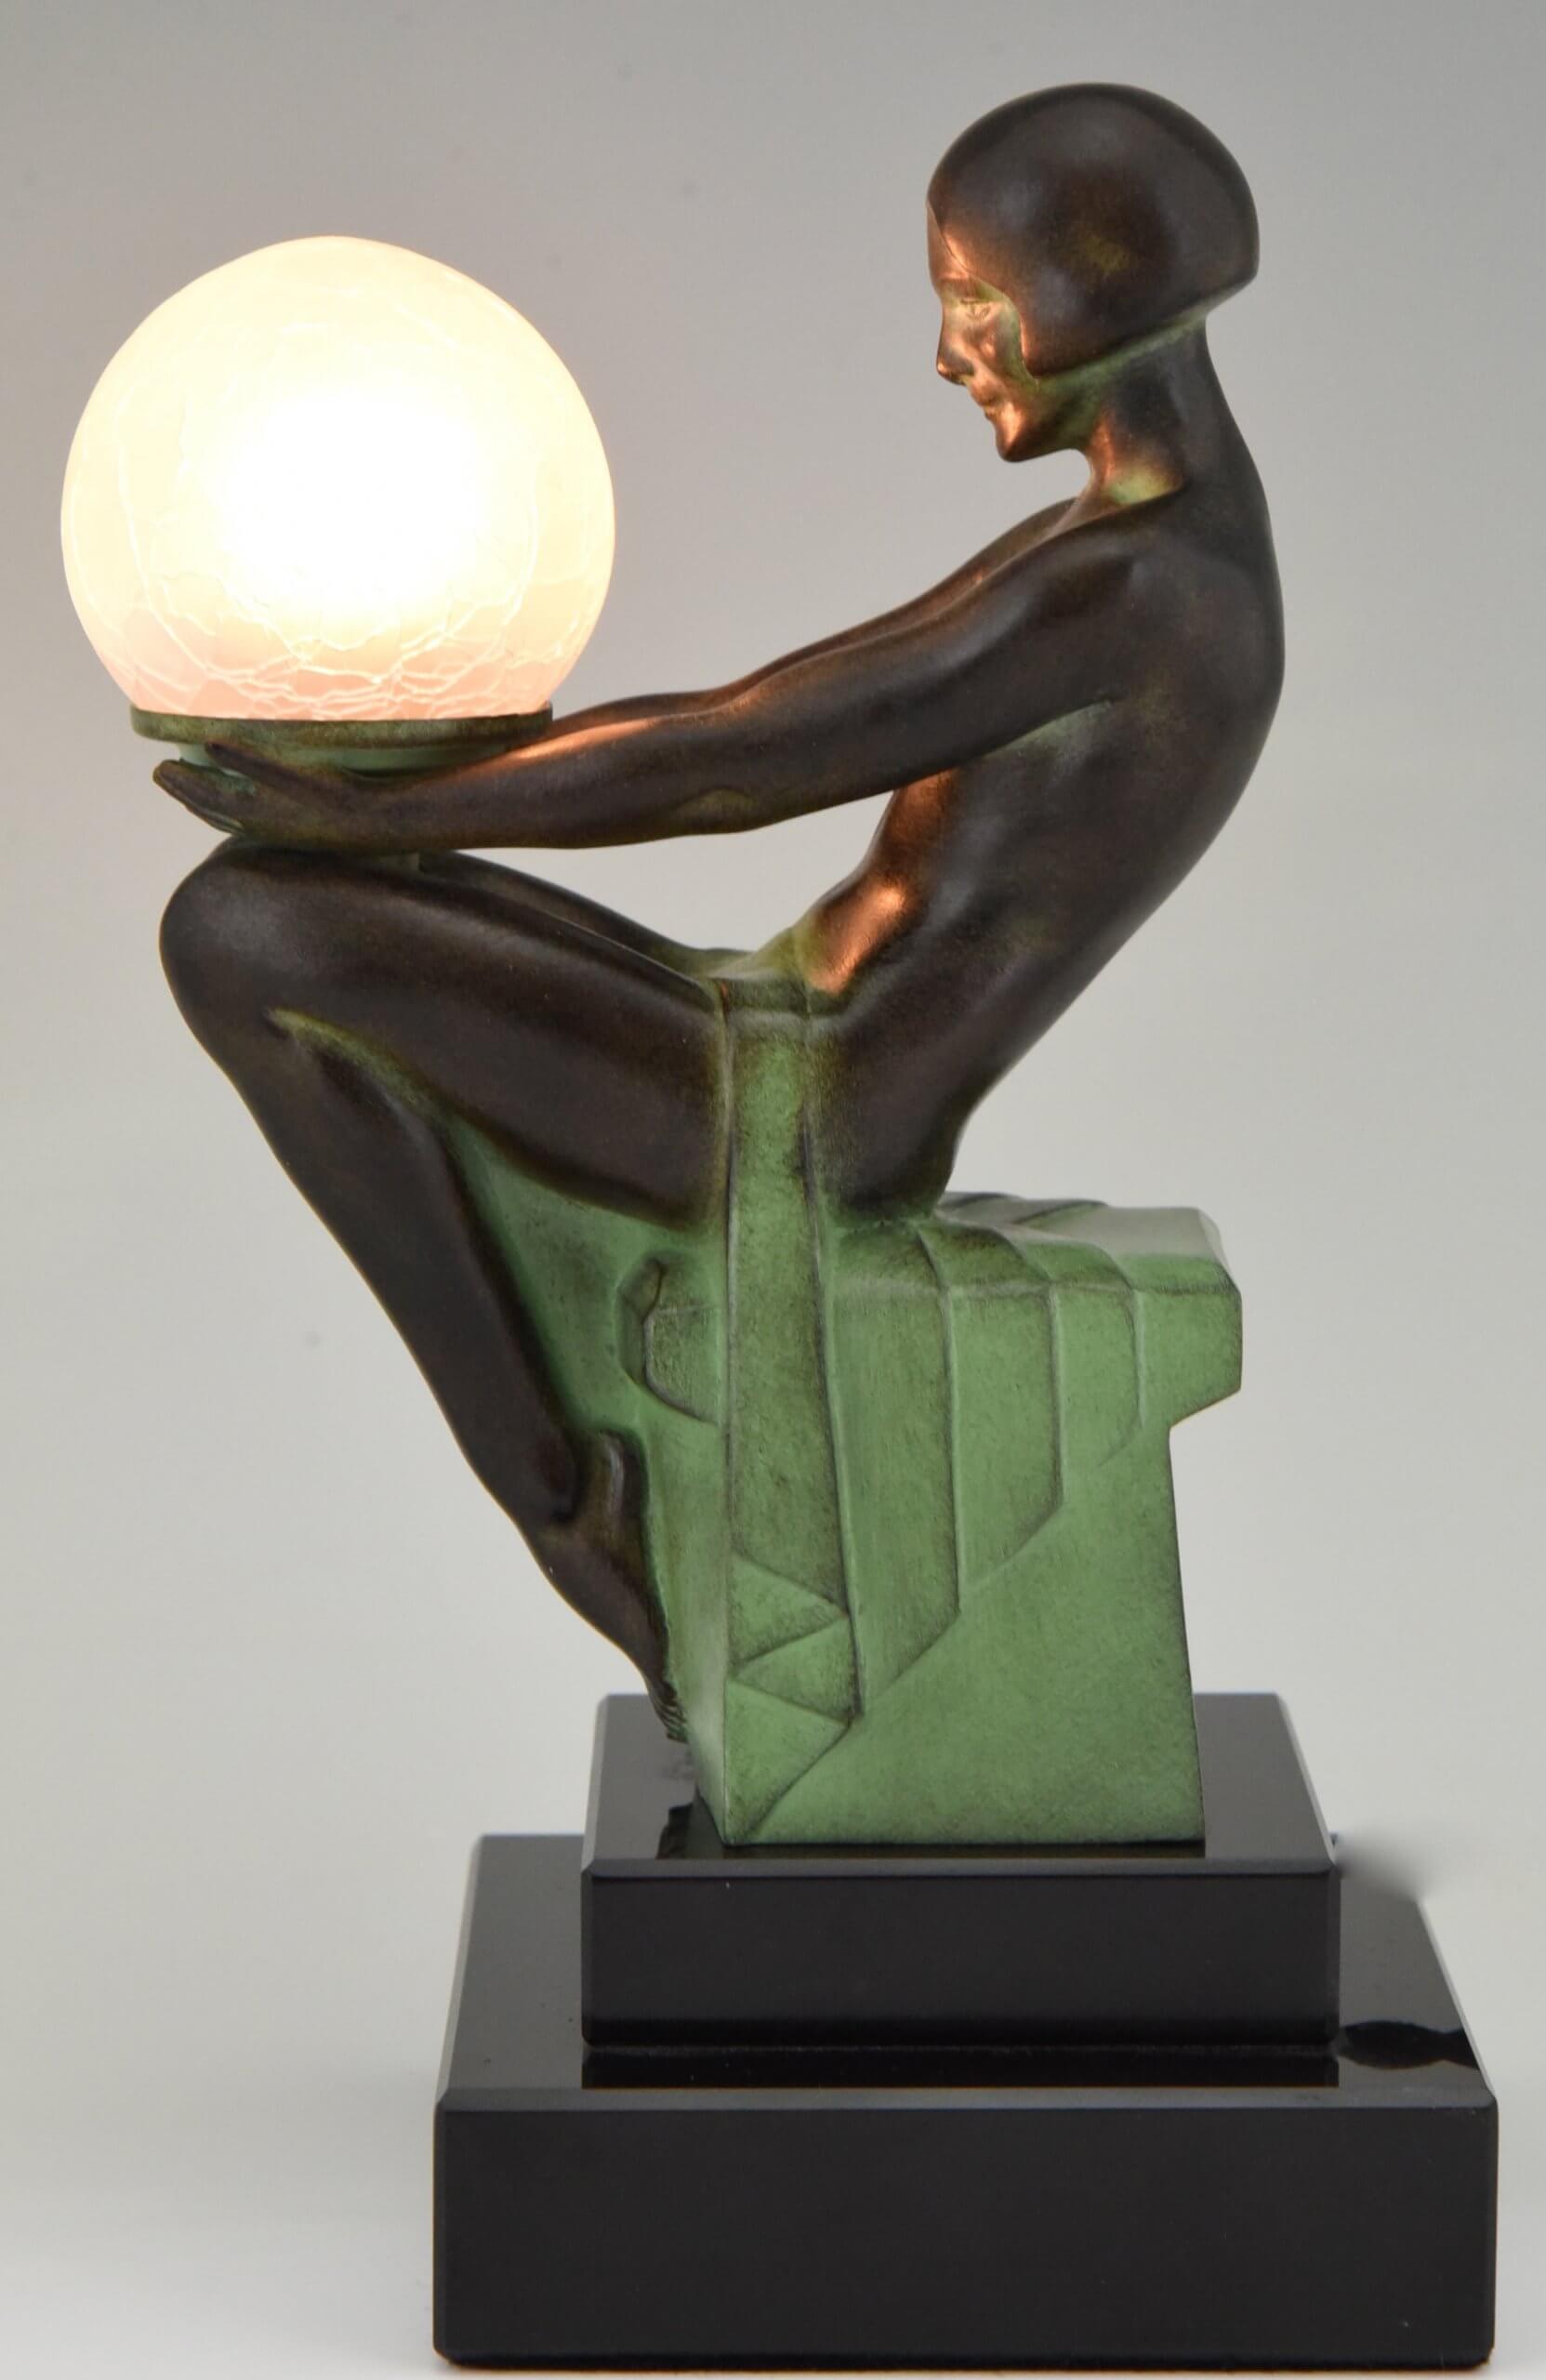 Lampe de salon Diva - Sculpture lumineuse d'exception